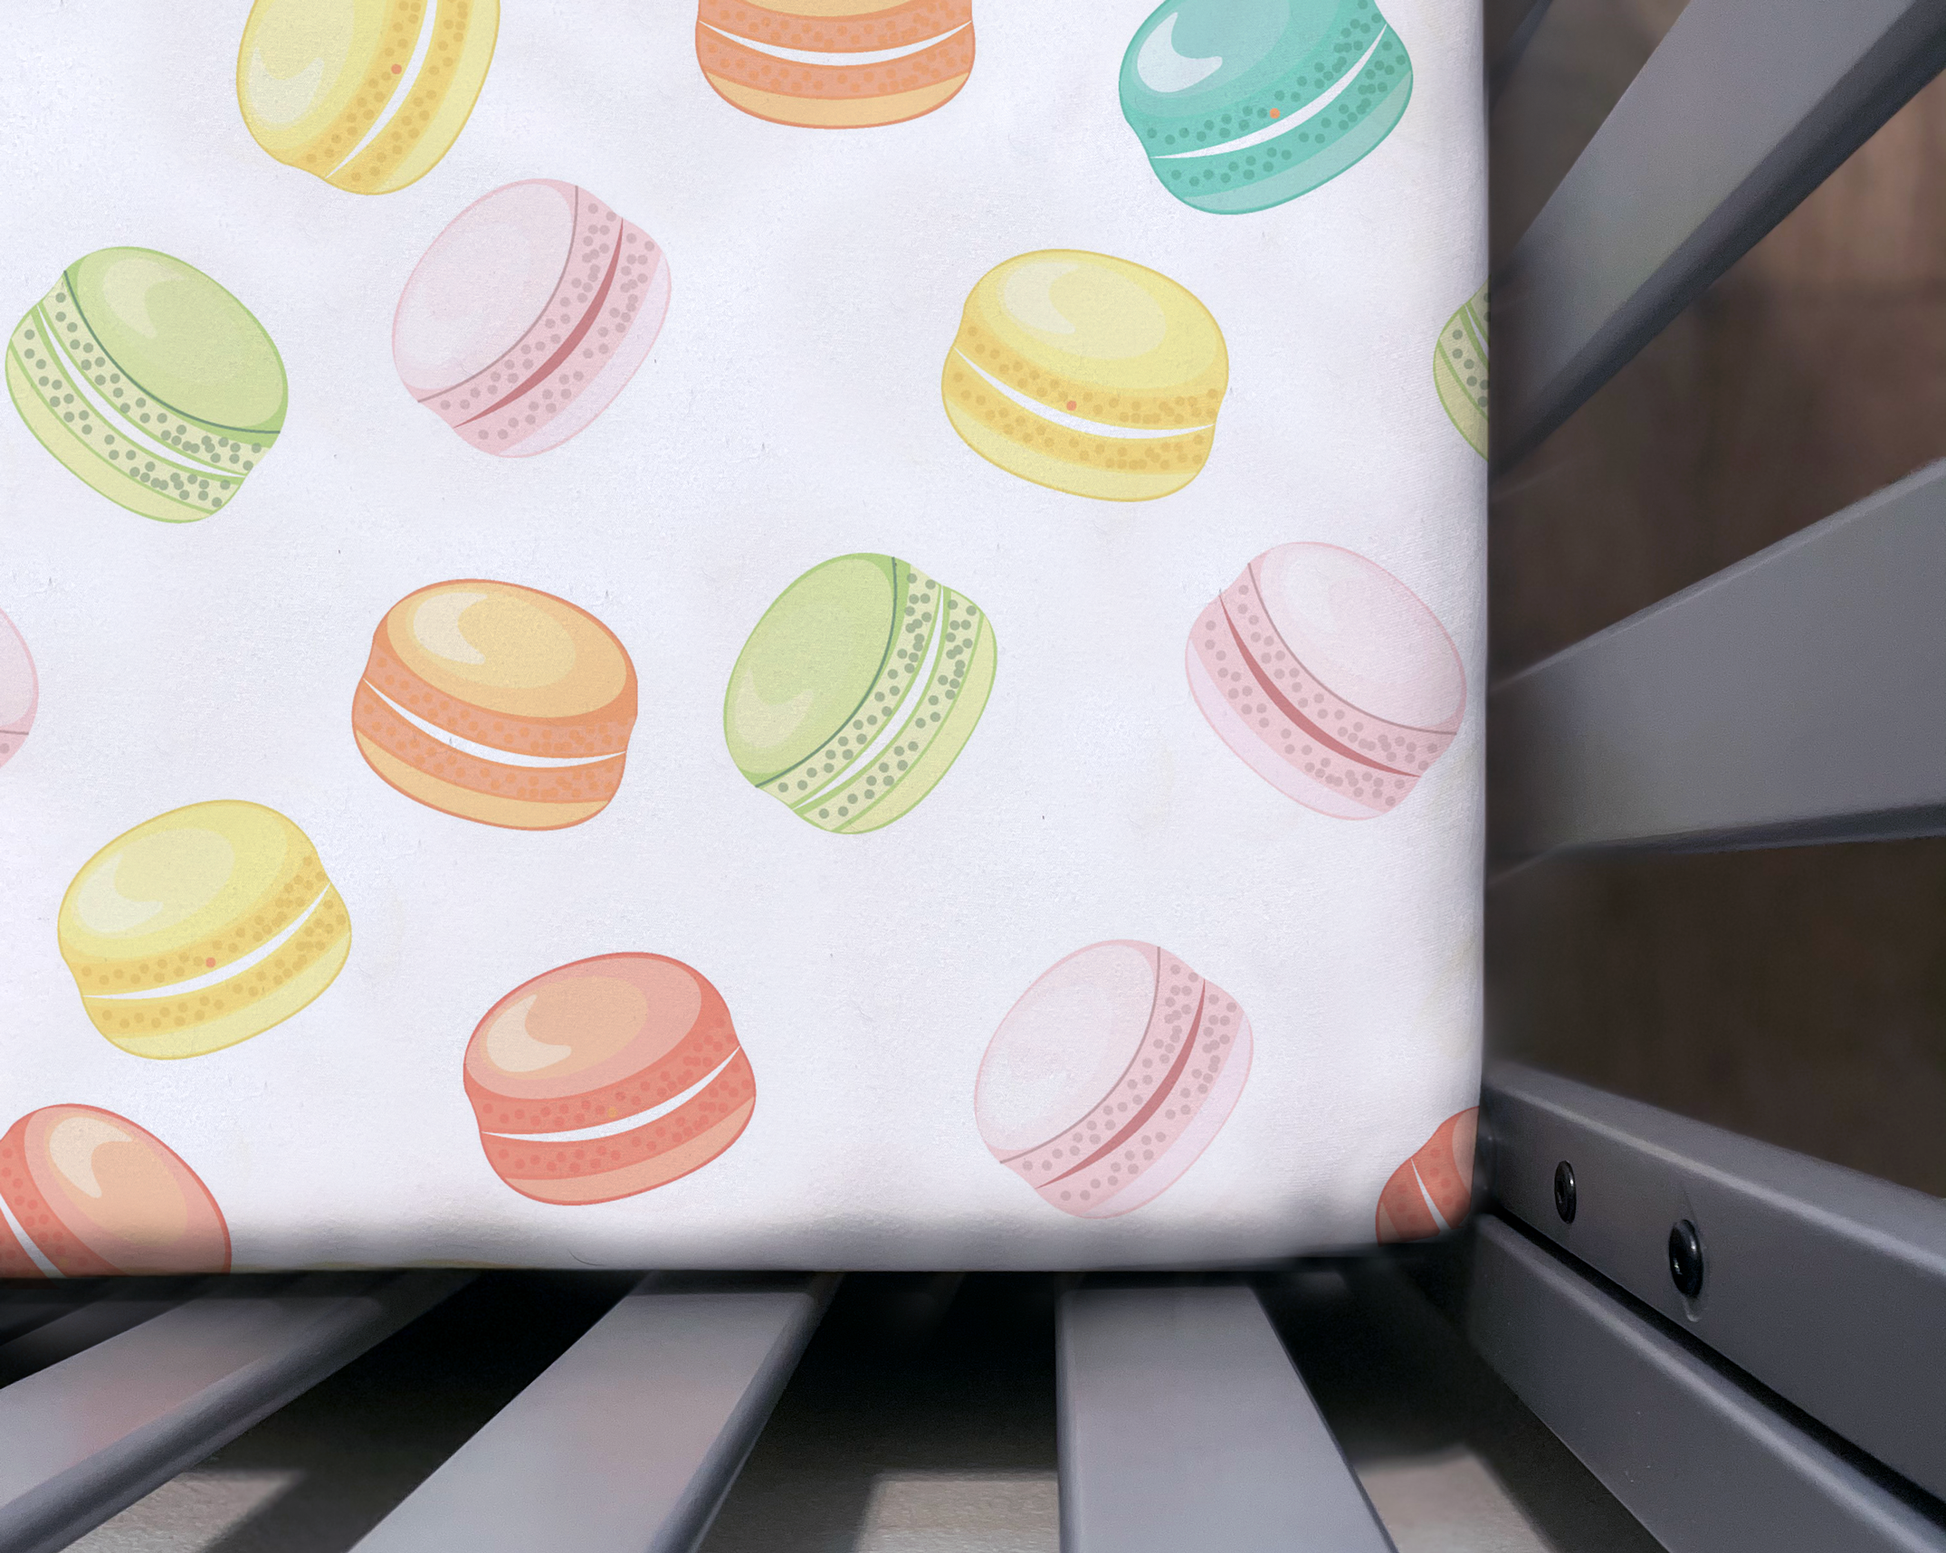 Sweet Macarons Crib Sheet - Lindsay Ann Artistry